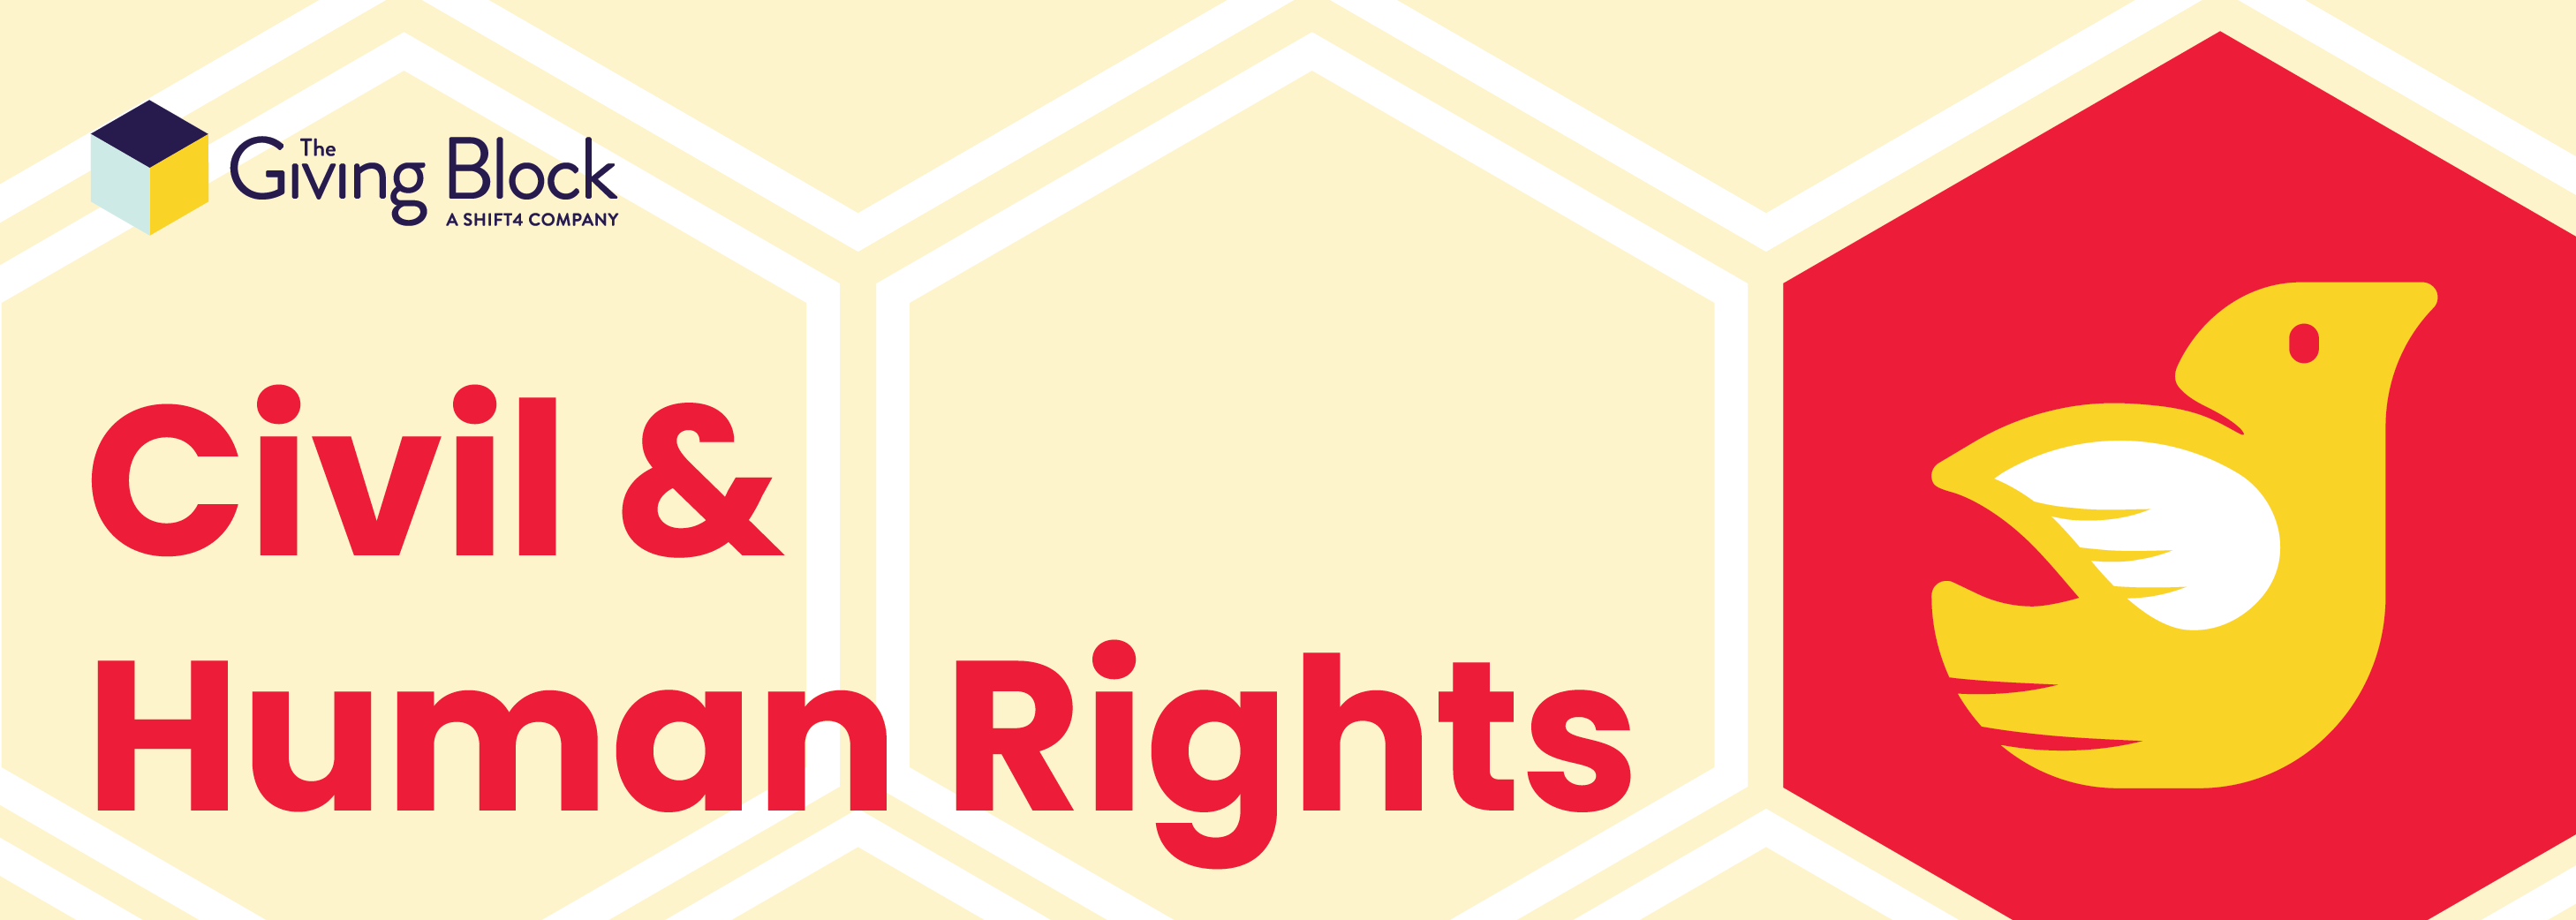 Header - Civil Human Rights | The Giving Block